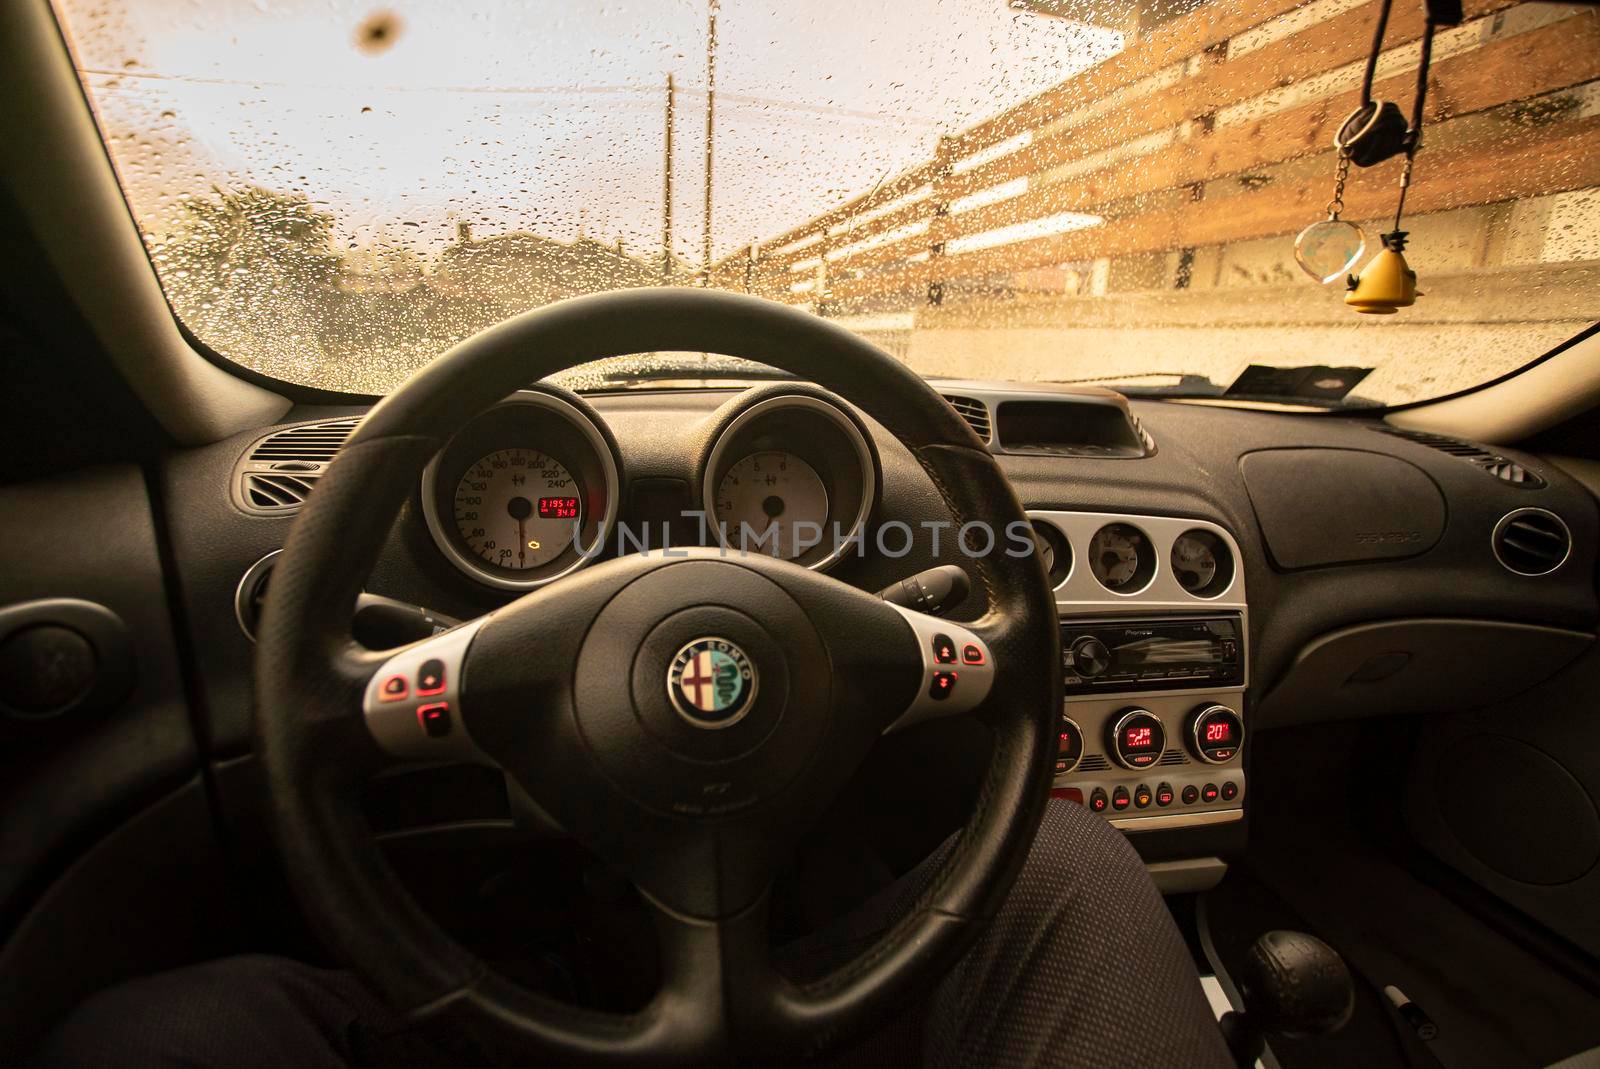 MILAN, ITALY 17 FEBRUARY 2021: Car dashboard interior detail